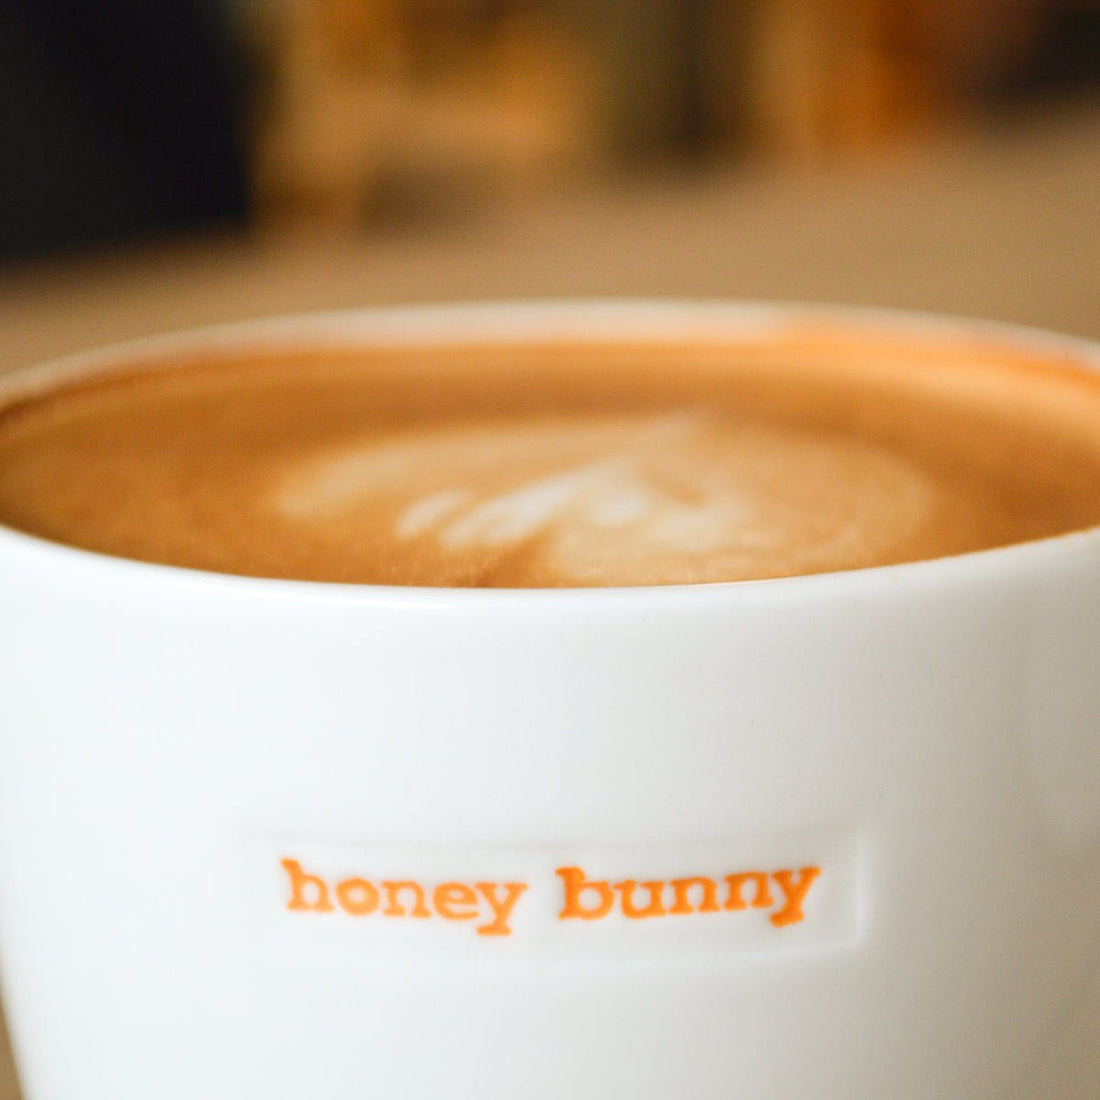 ‘Honey Bunny’ Mug - The Flower Crate